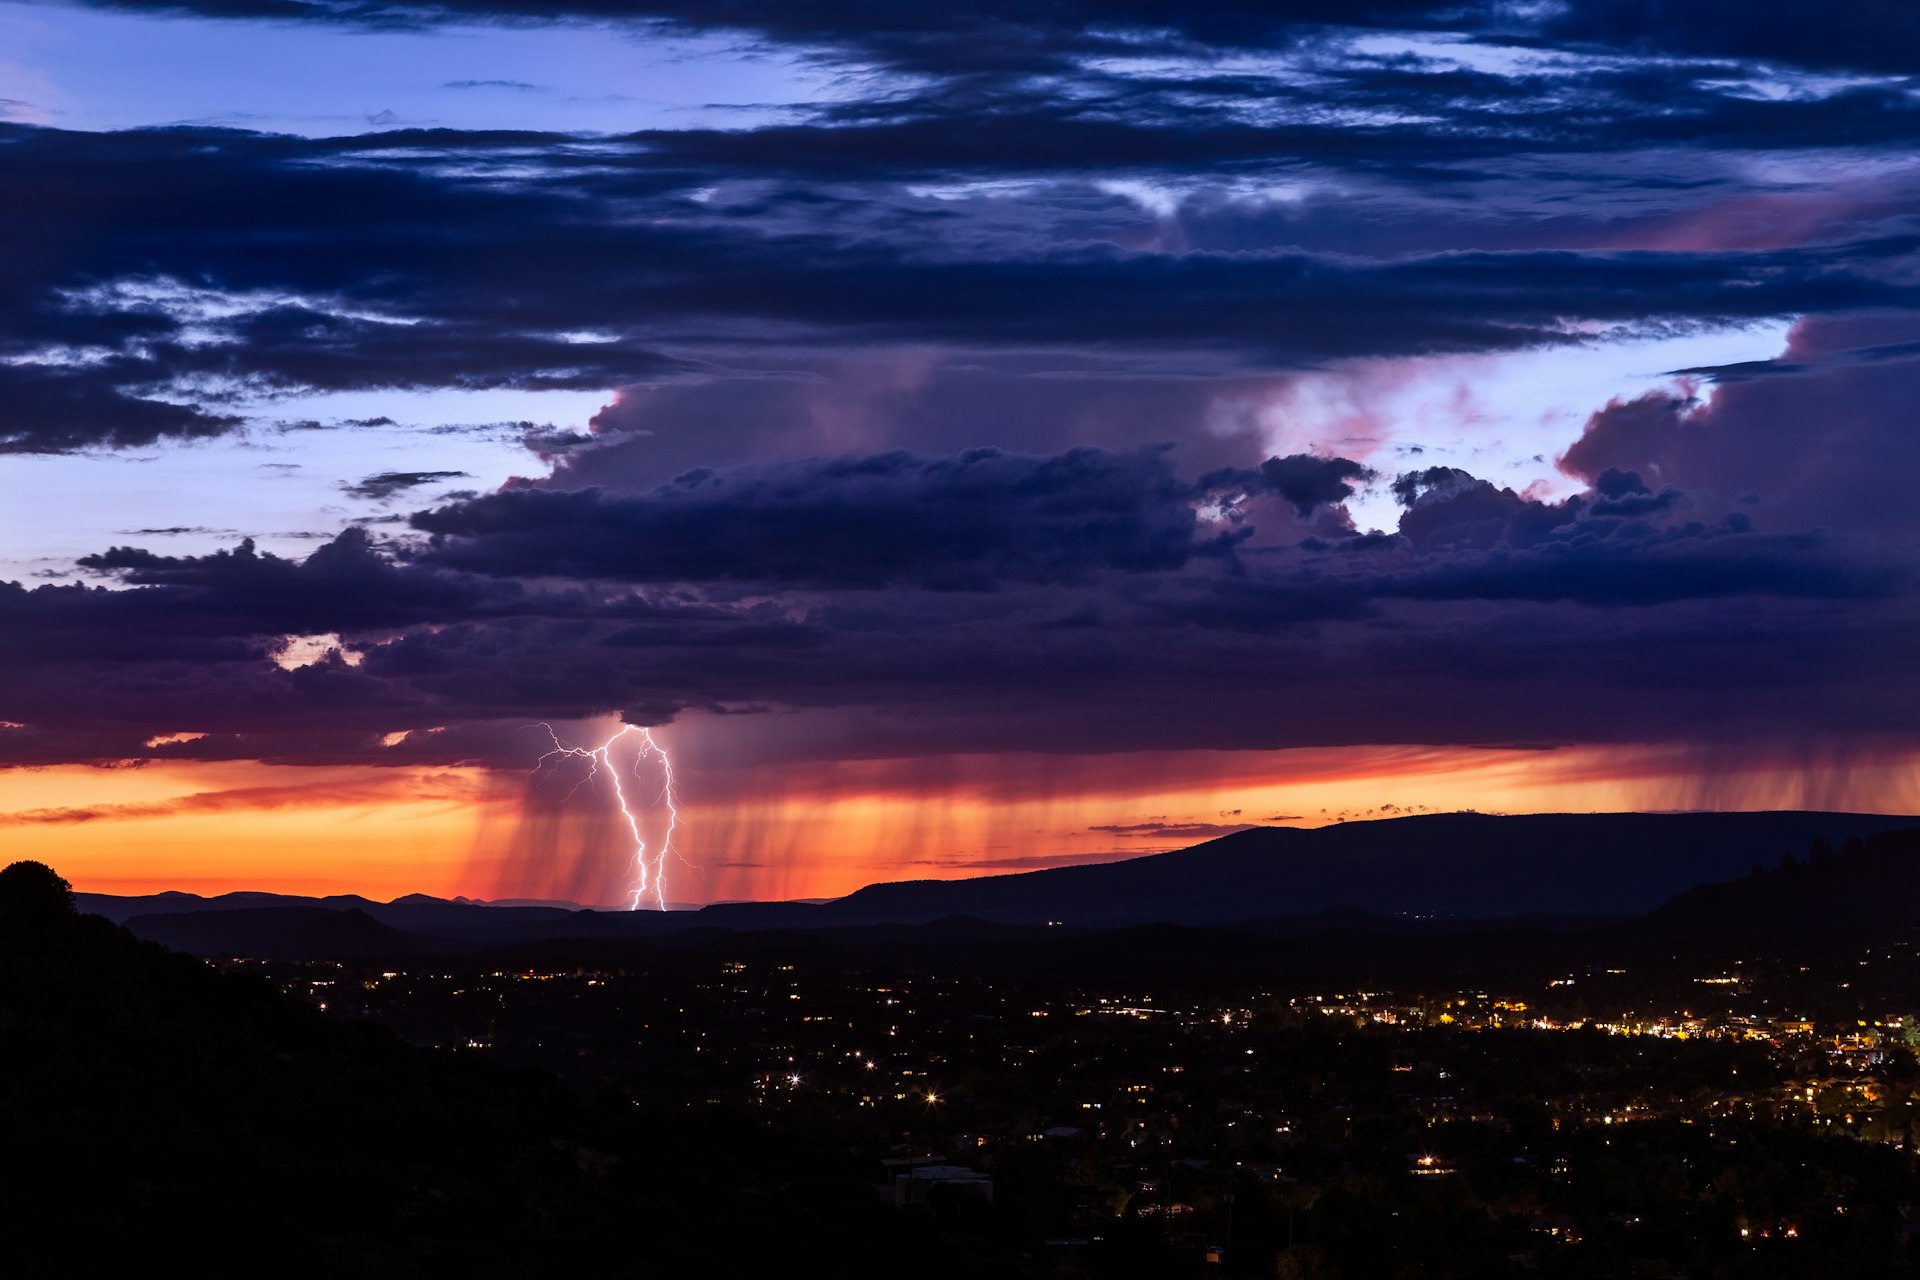 Thunderstorm with lightning bolt strike over Sedona, Arizona.